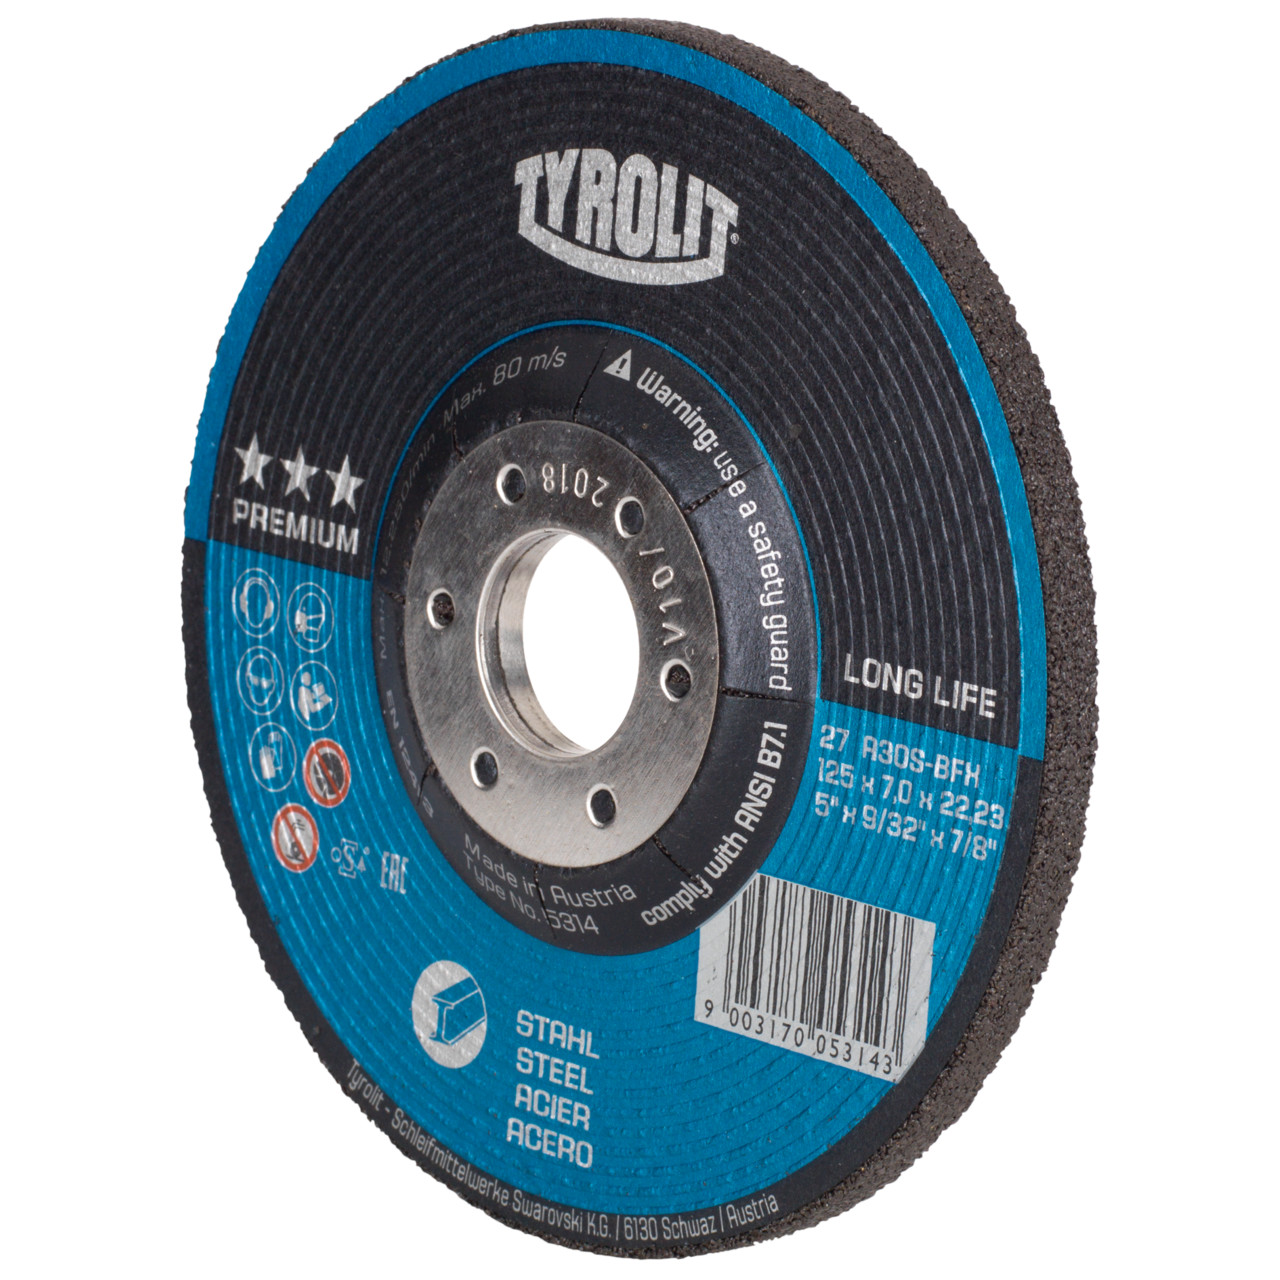 Tyrolit Rough grinding disc DxUxH 115x7x22.23 LONGLIFE Z-MAX for steel, shape: 27 - offset version, Art. 34353683